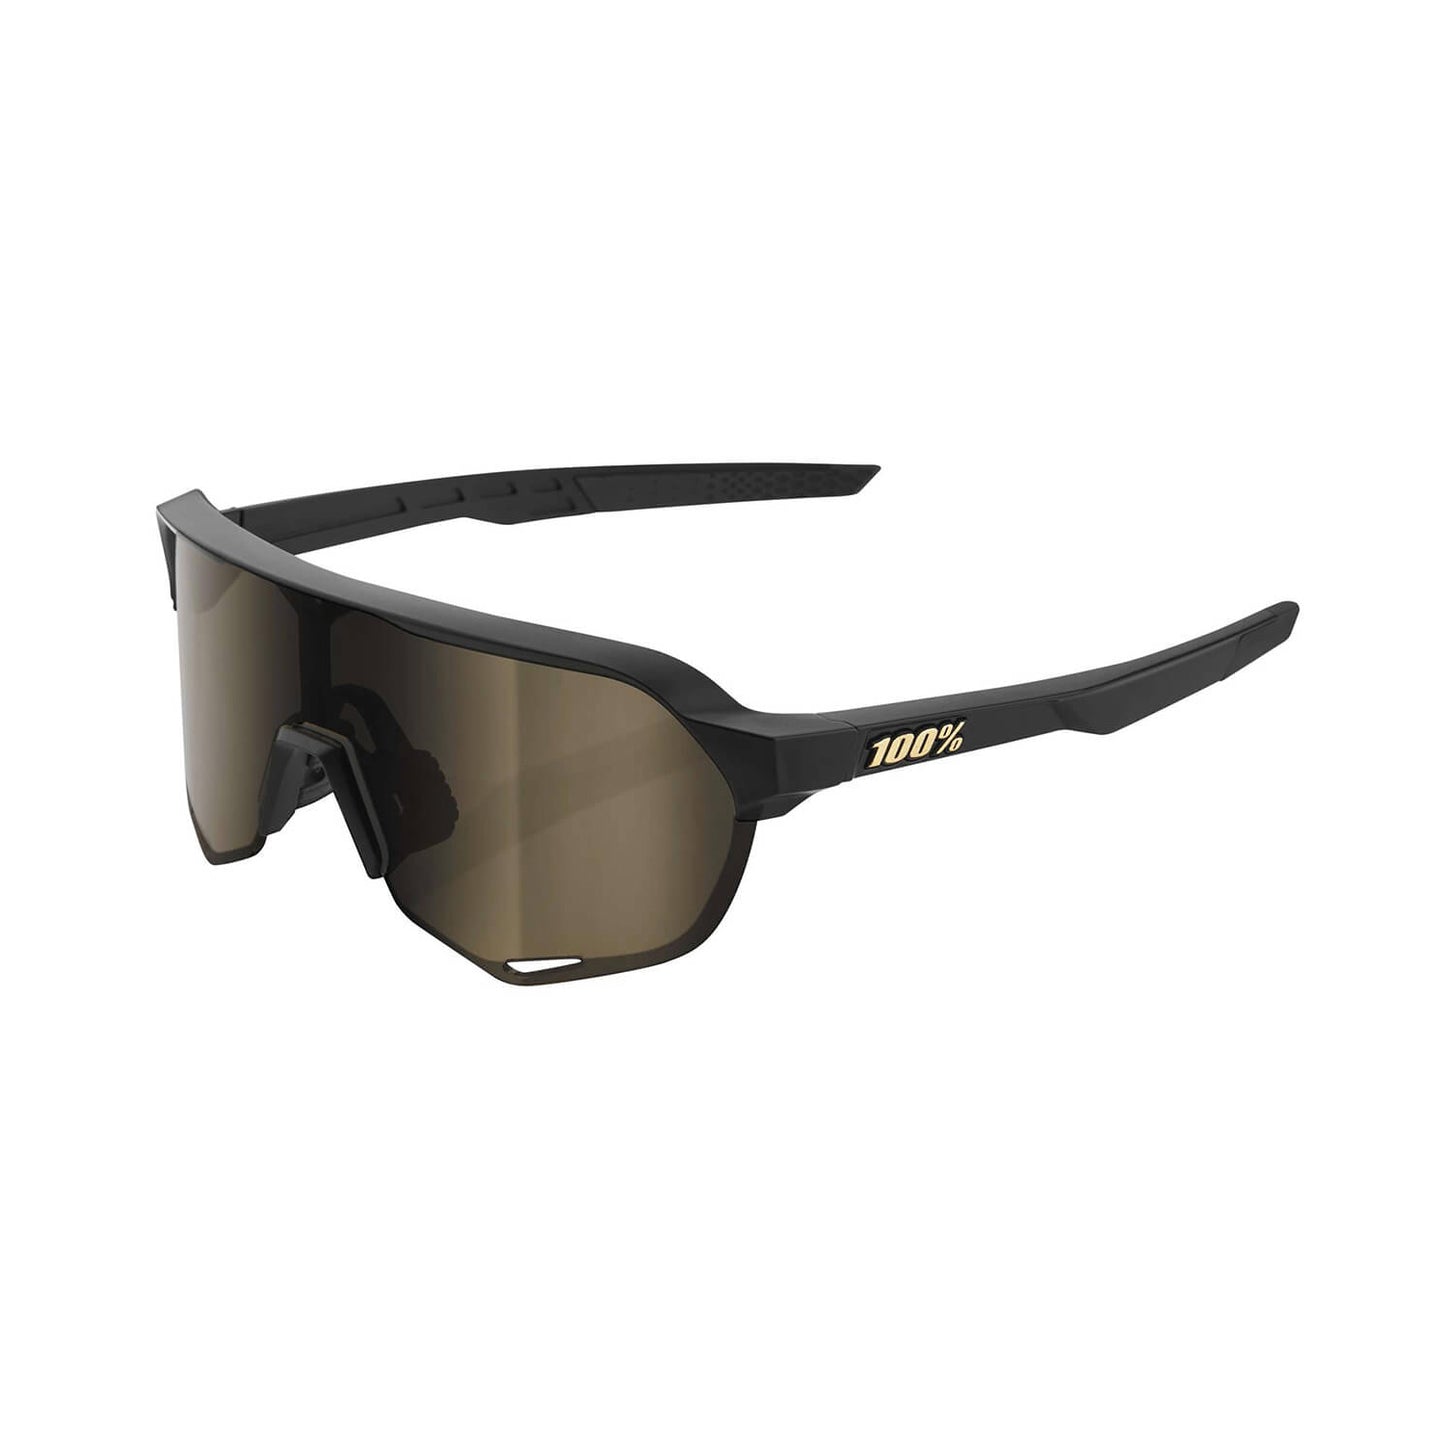 100 Percent S2 Sunglasses - Matte Black - Soft Gold Mirror Lens